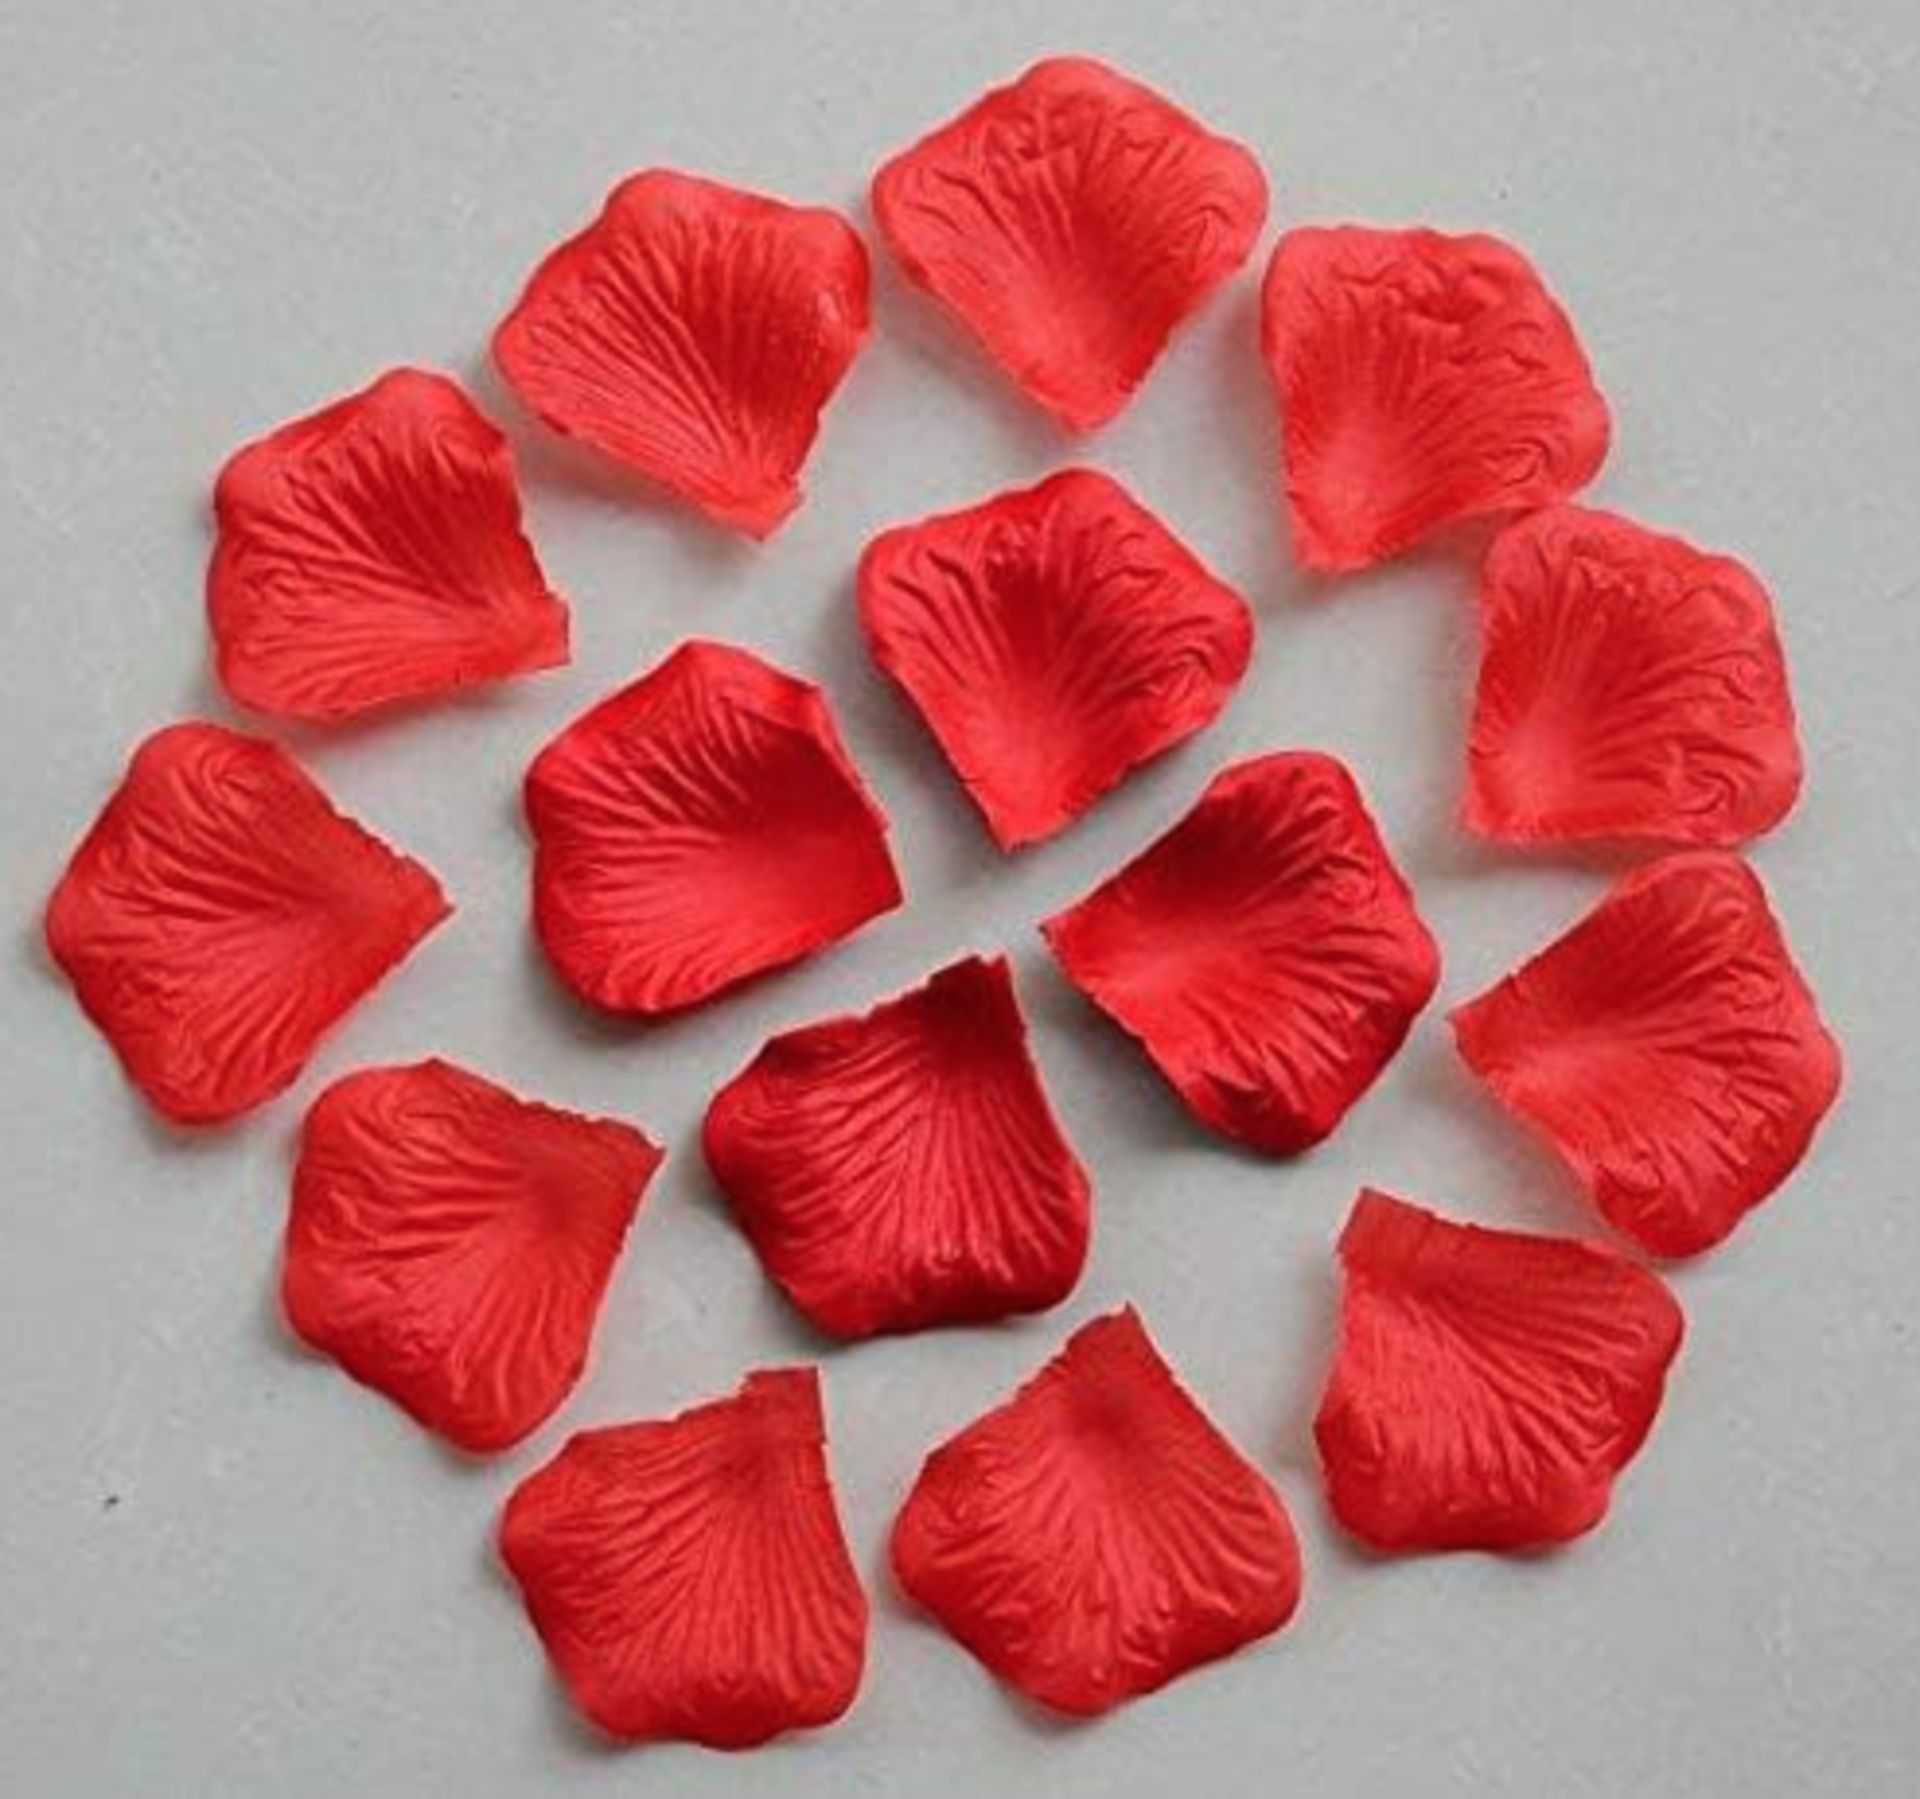 1,000pcs Deep Red Silk Rose Petals Valentines Day Wedding Confetti RRP £30 (10 x 100 pcs) - Image 3 of 3